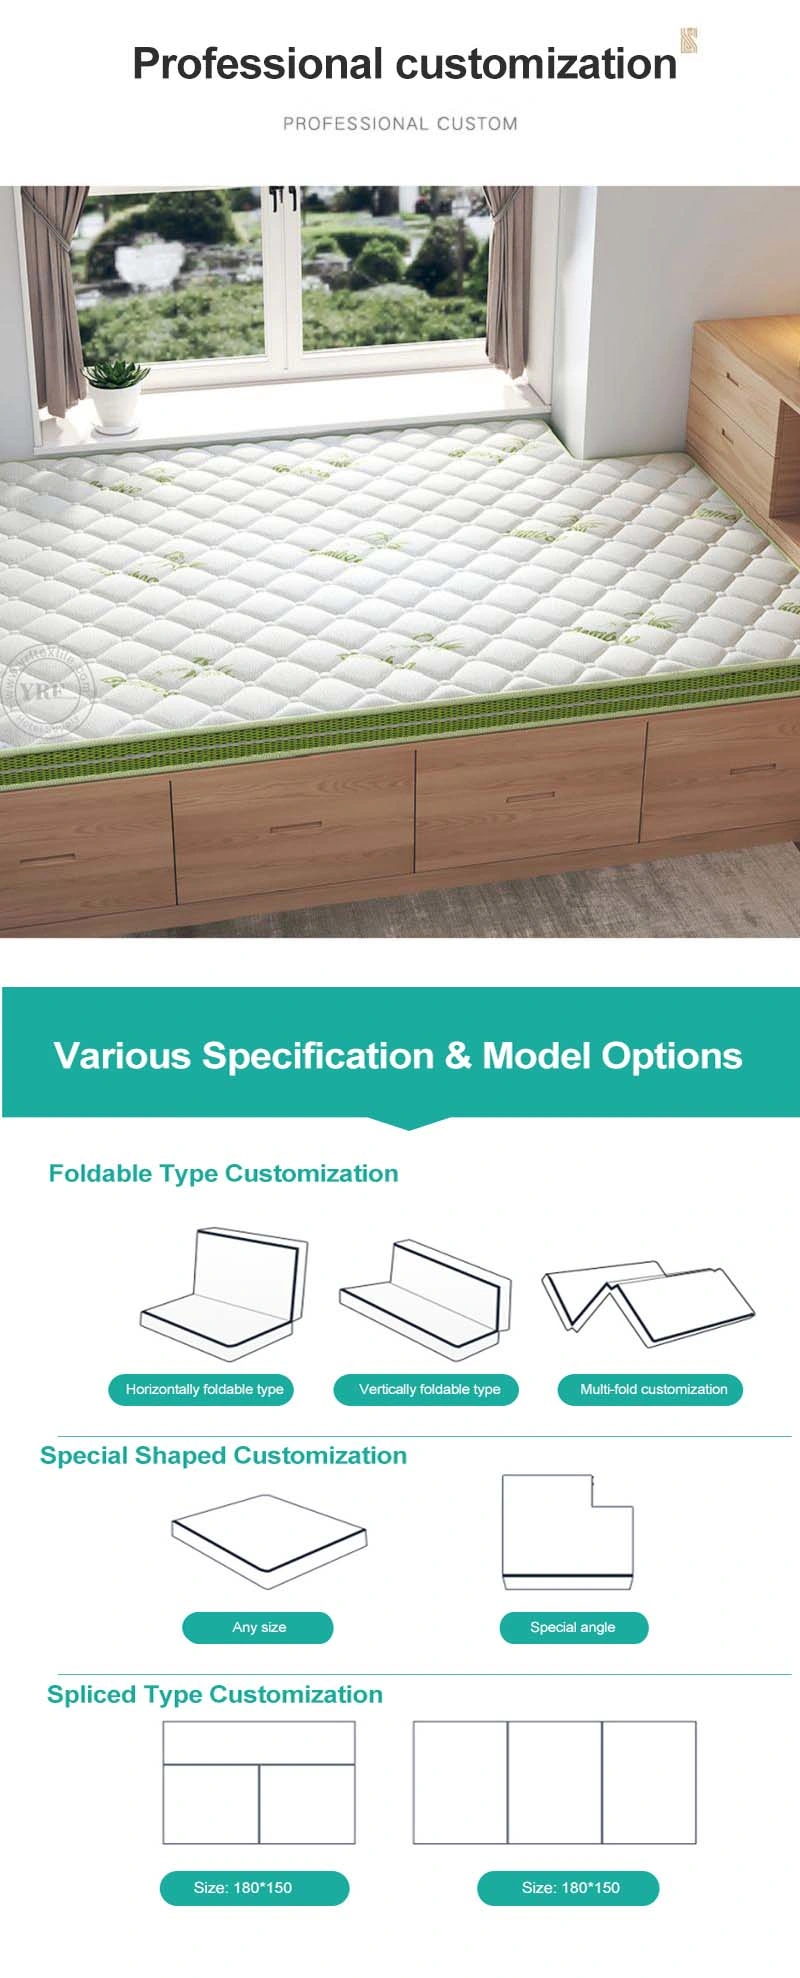 Home Foam Sleeping Tatami Triple Folded Detachable Washable 18cm Single Bed